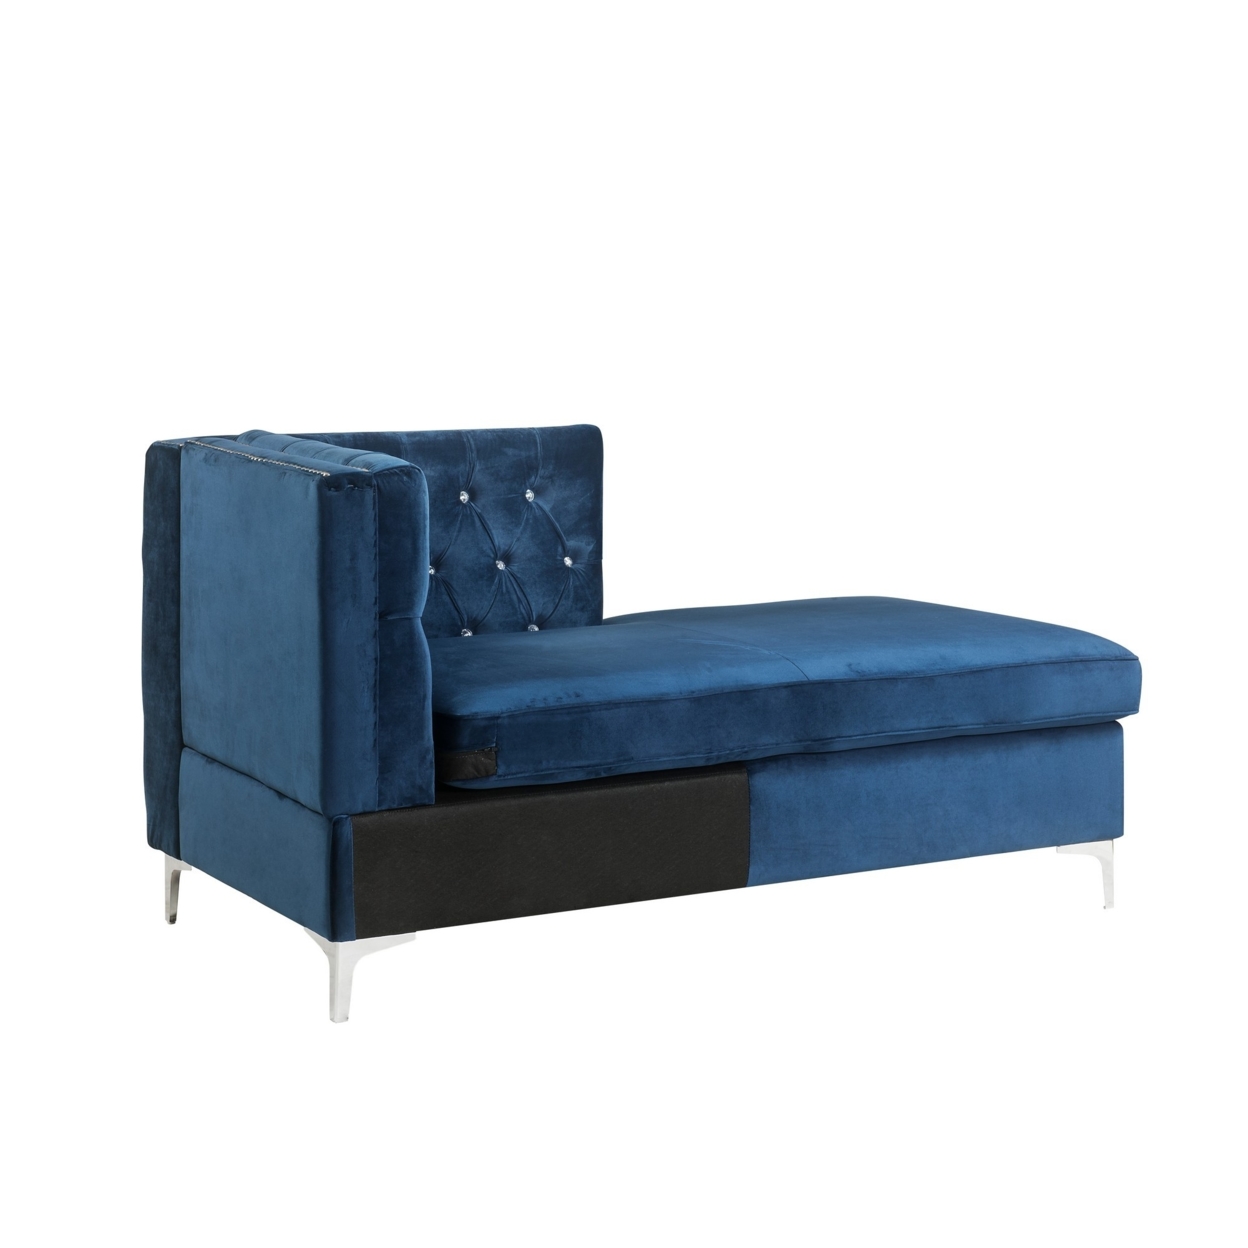 Chaise With Velvet Upholstery And Metal Legs, Blue- Saltoro Sherpi